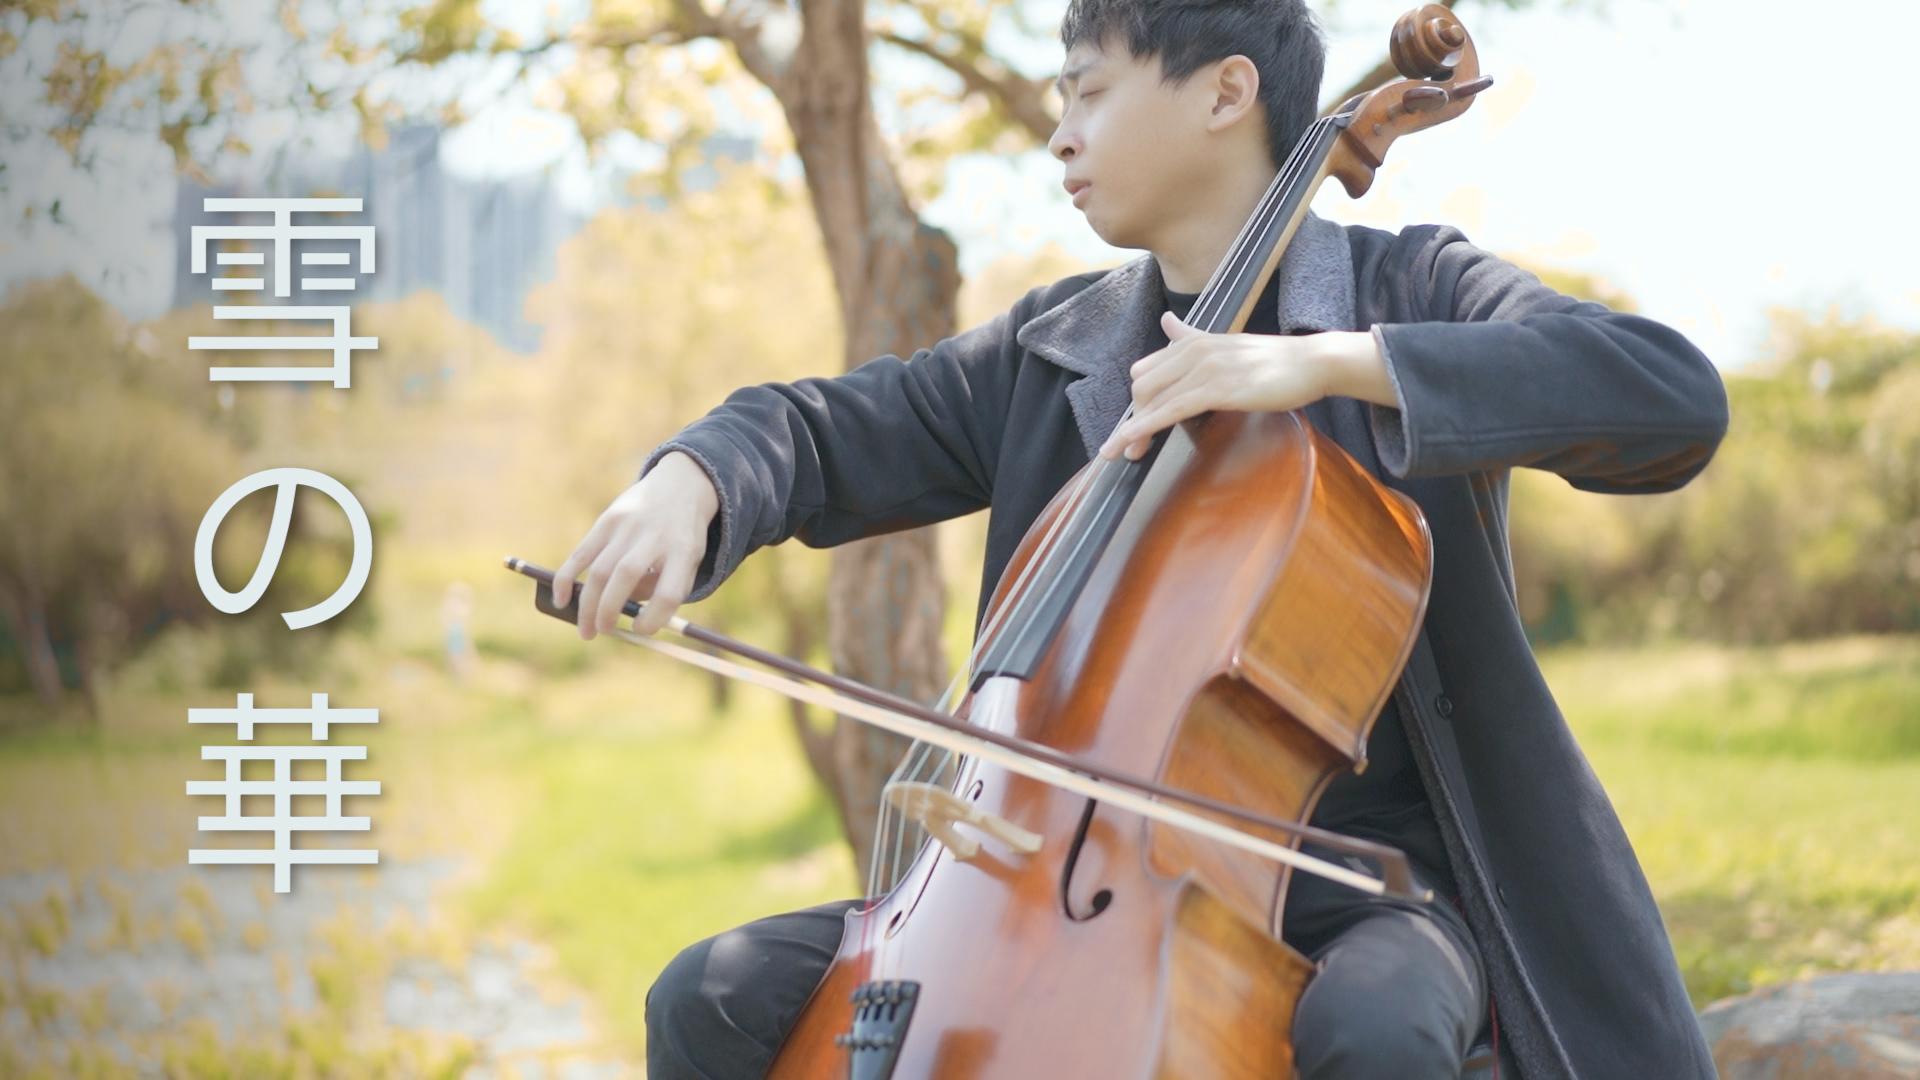 雪の華 / 雪花 中島美嘉 大提琴版本 cello cover 『cover by YoYo Cello』